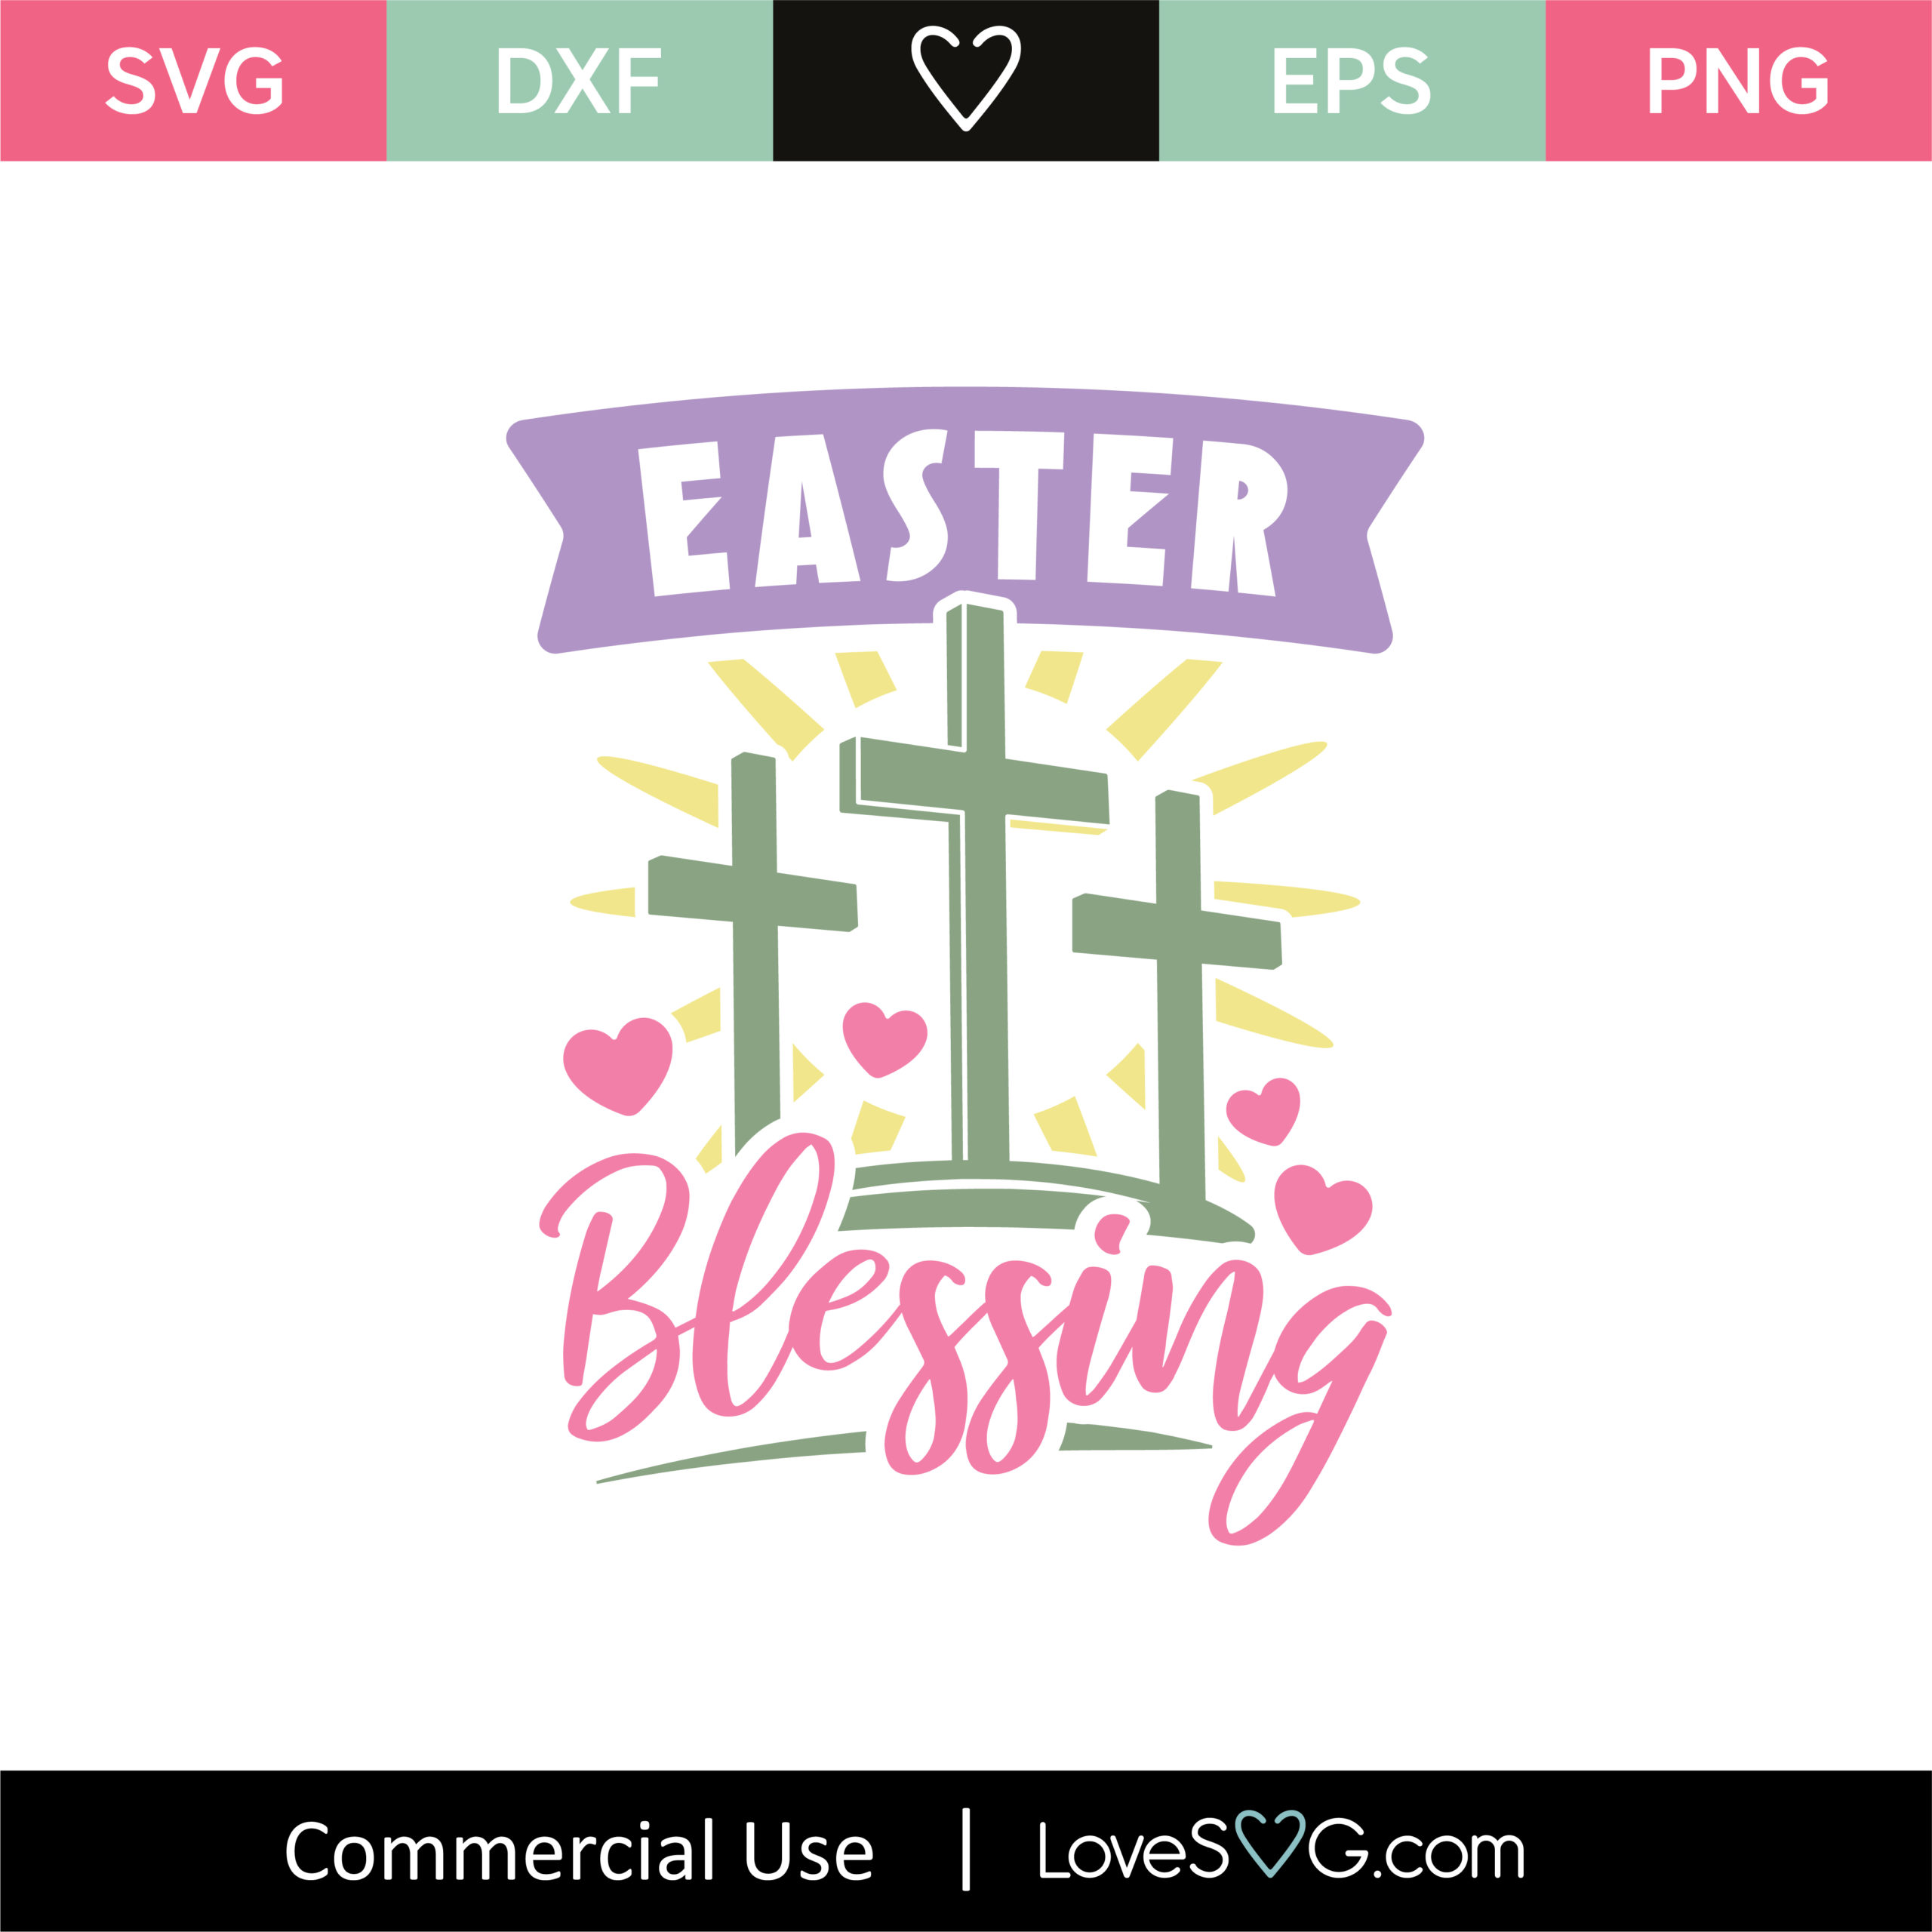 Easter Blessing SVG Cut File - Lovesvg.com